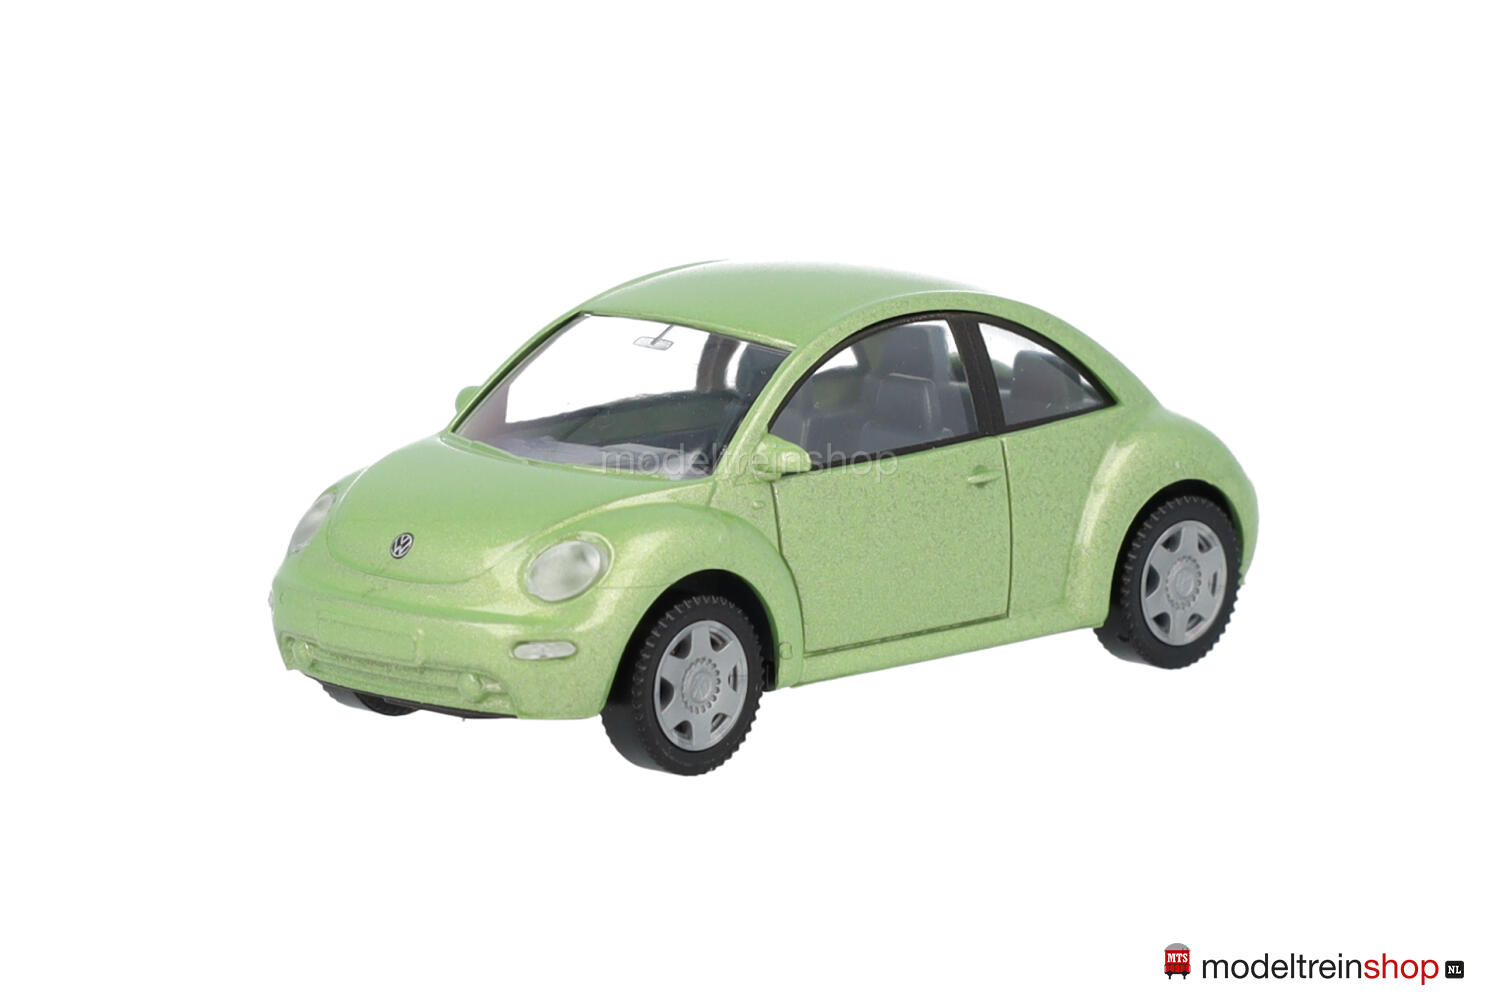 Wiking H0 Volkswagen Beetle - Modeltreinshop